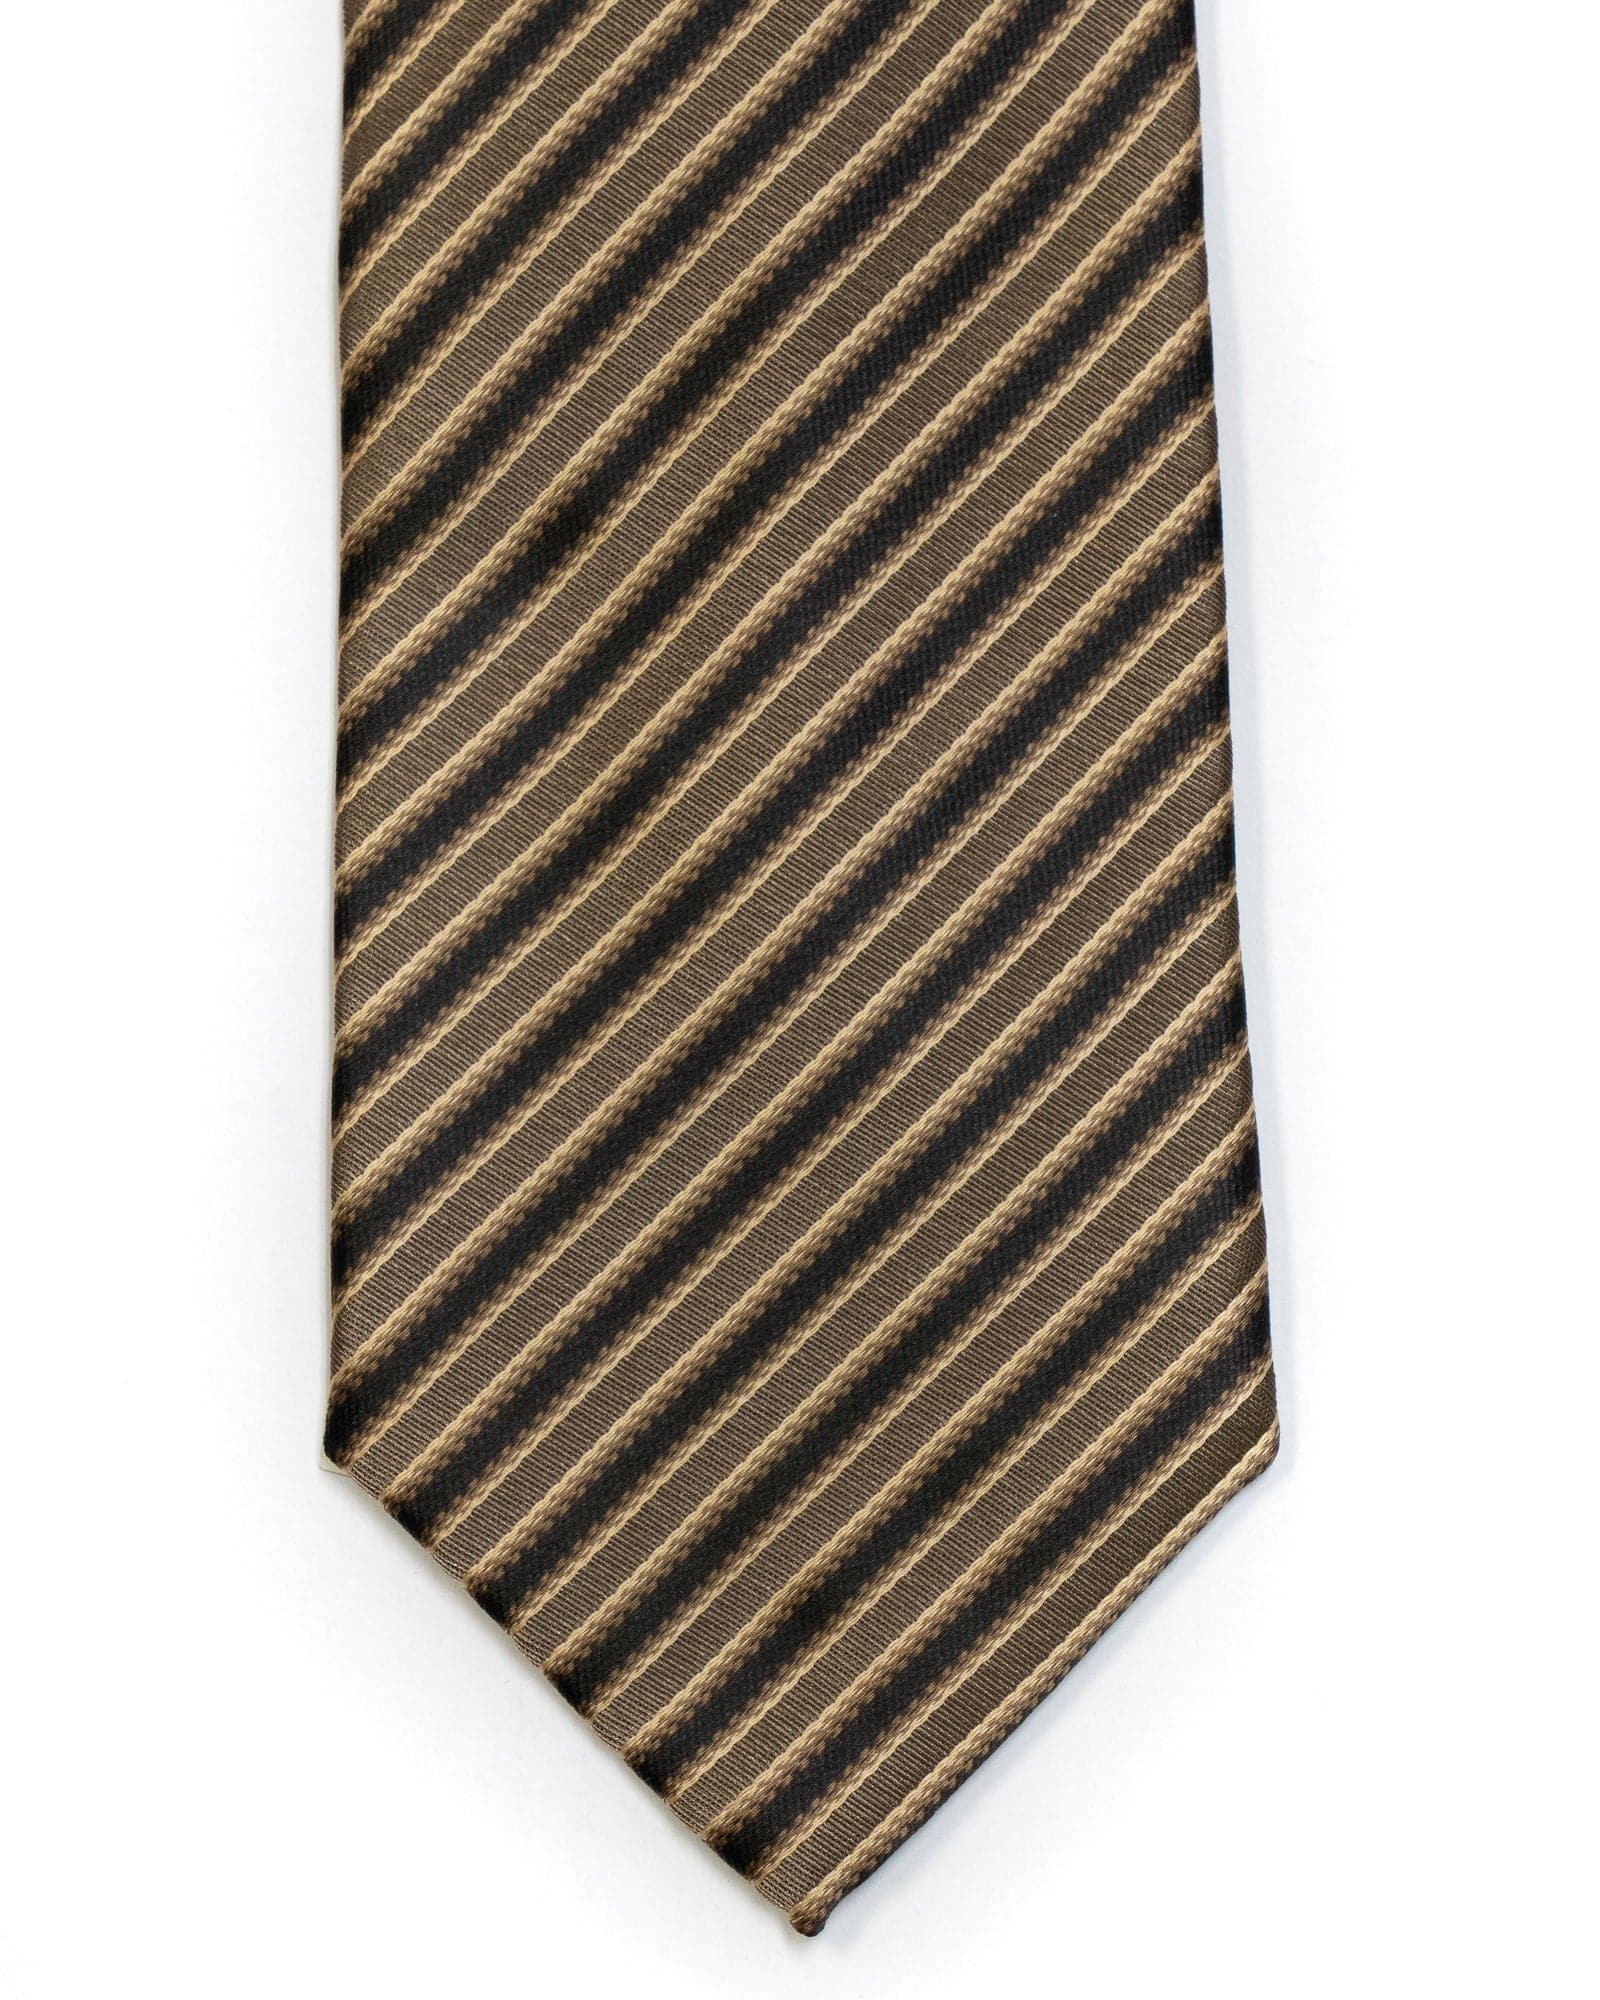 Imani Uomo Stripe Tie in Tan with Black - Rainwater's Men's Clothing and Tuxedo Rental